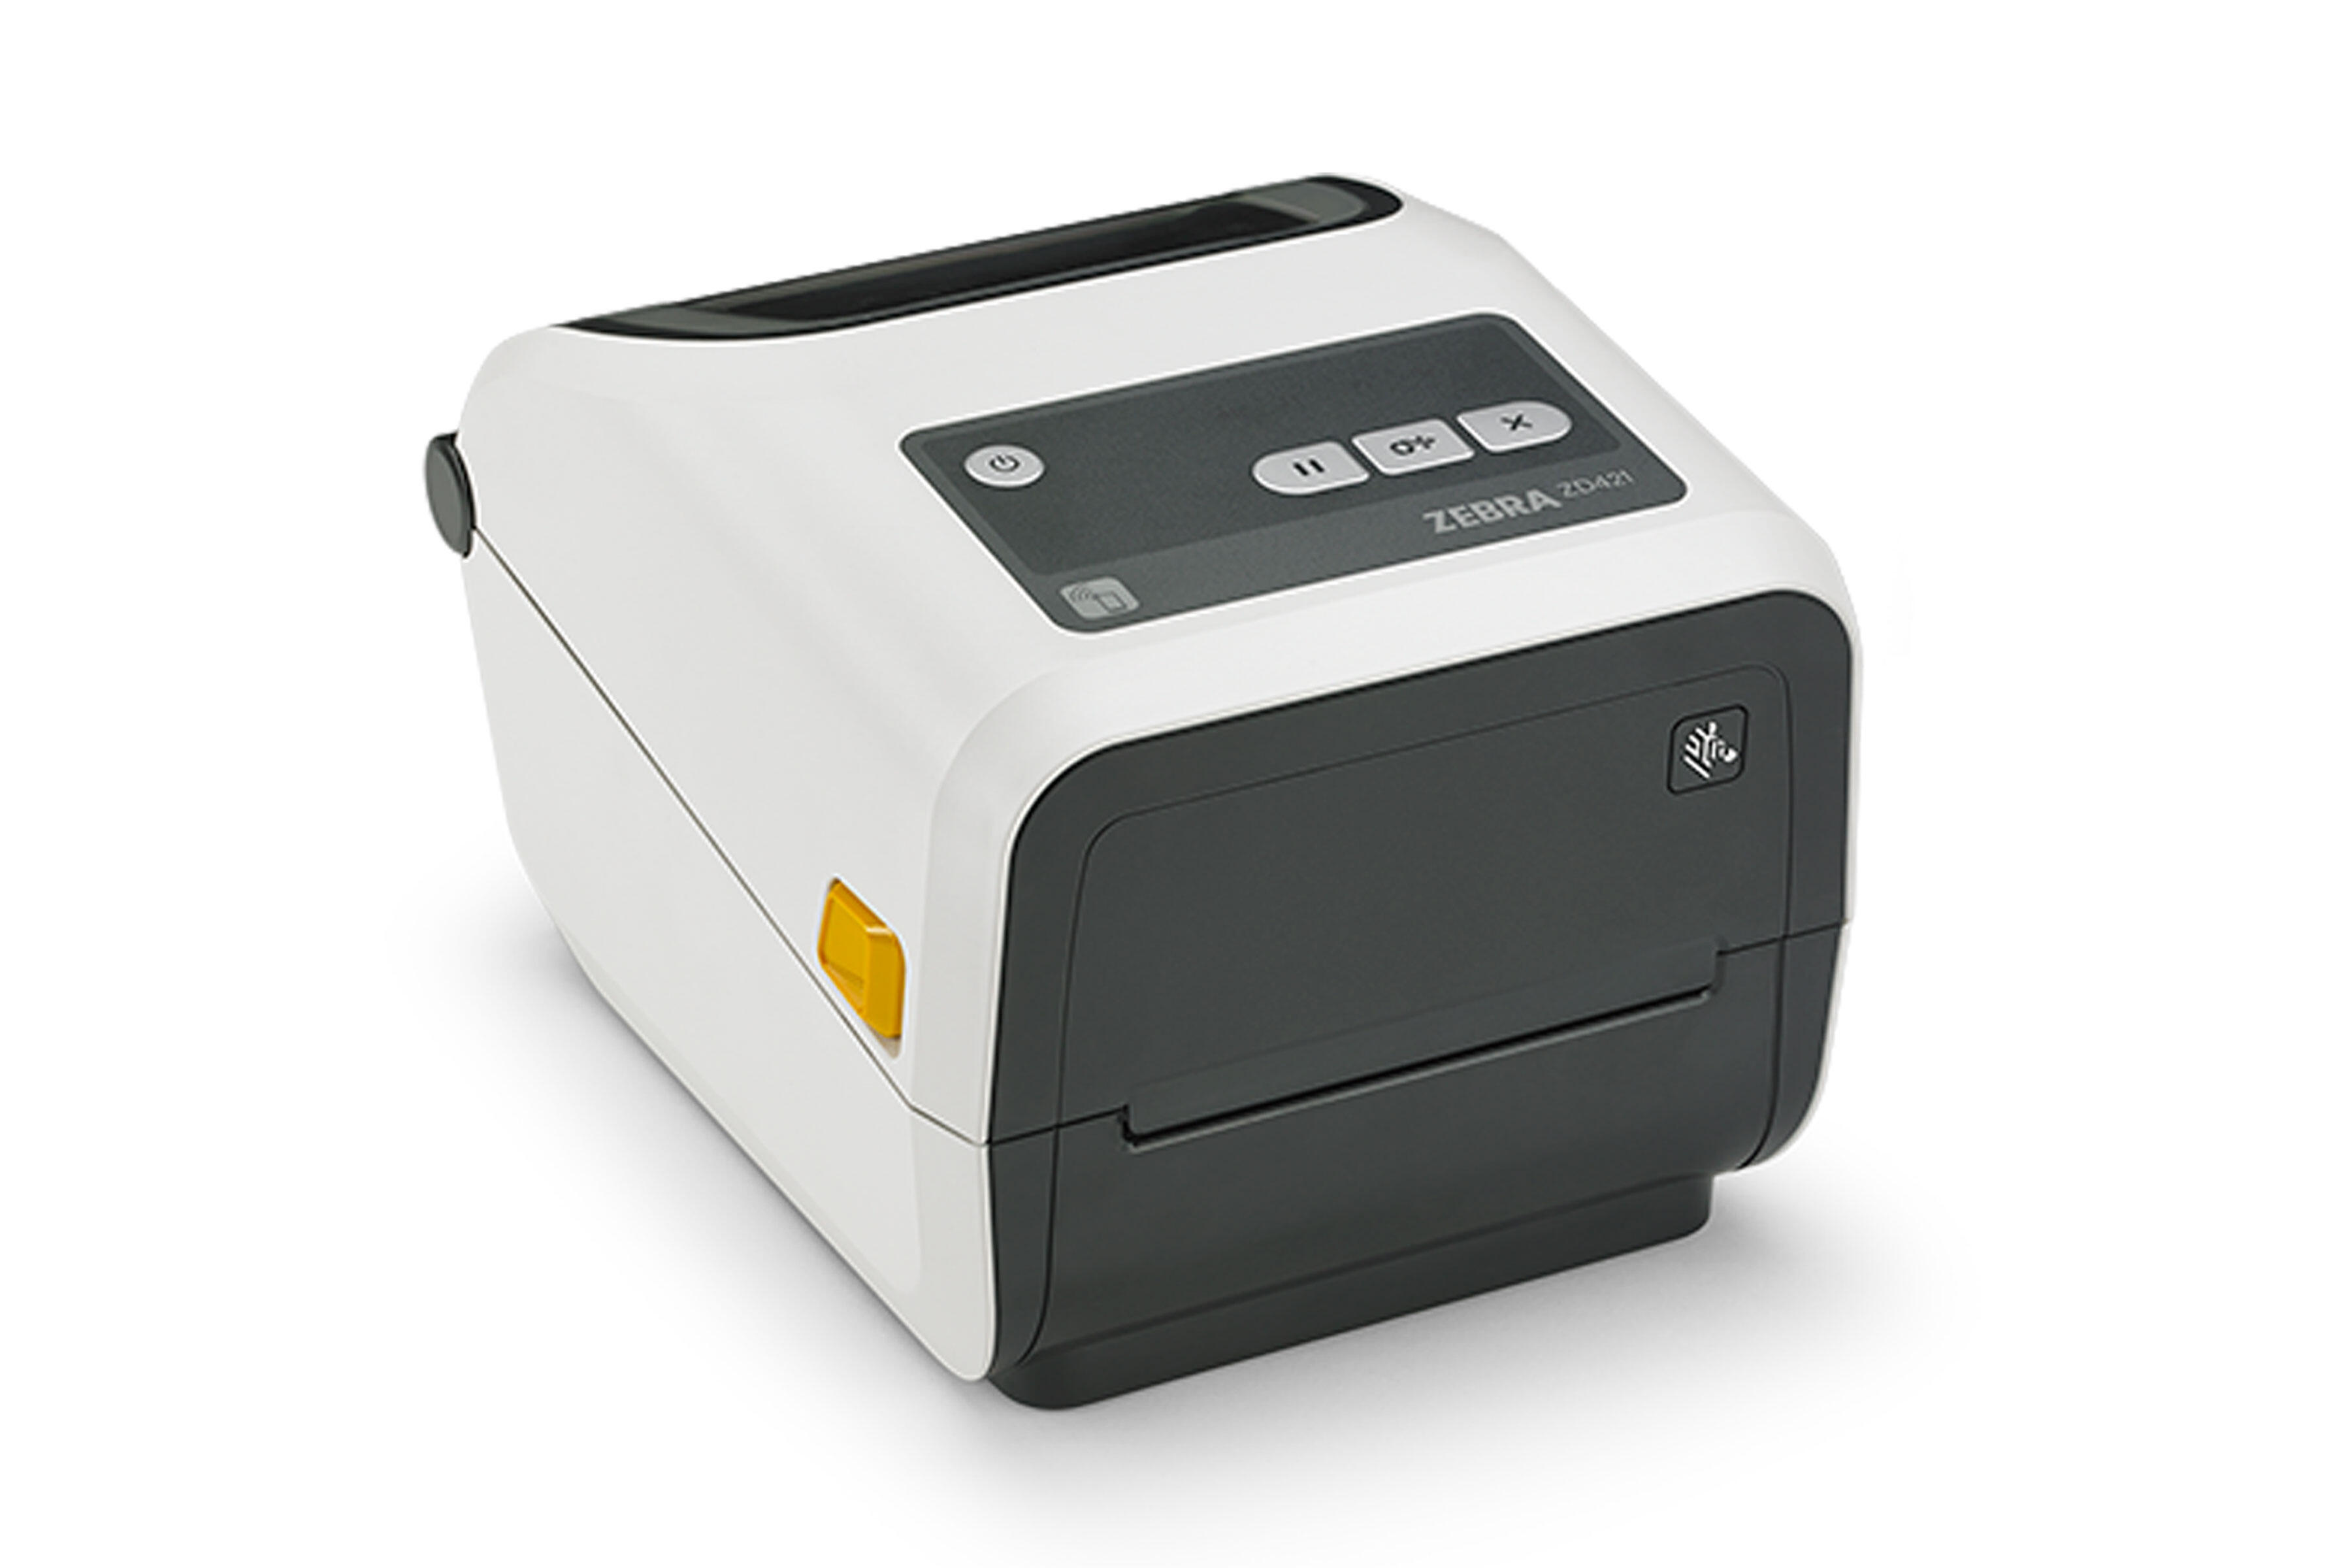 Zd400 series desktop printers